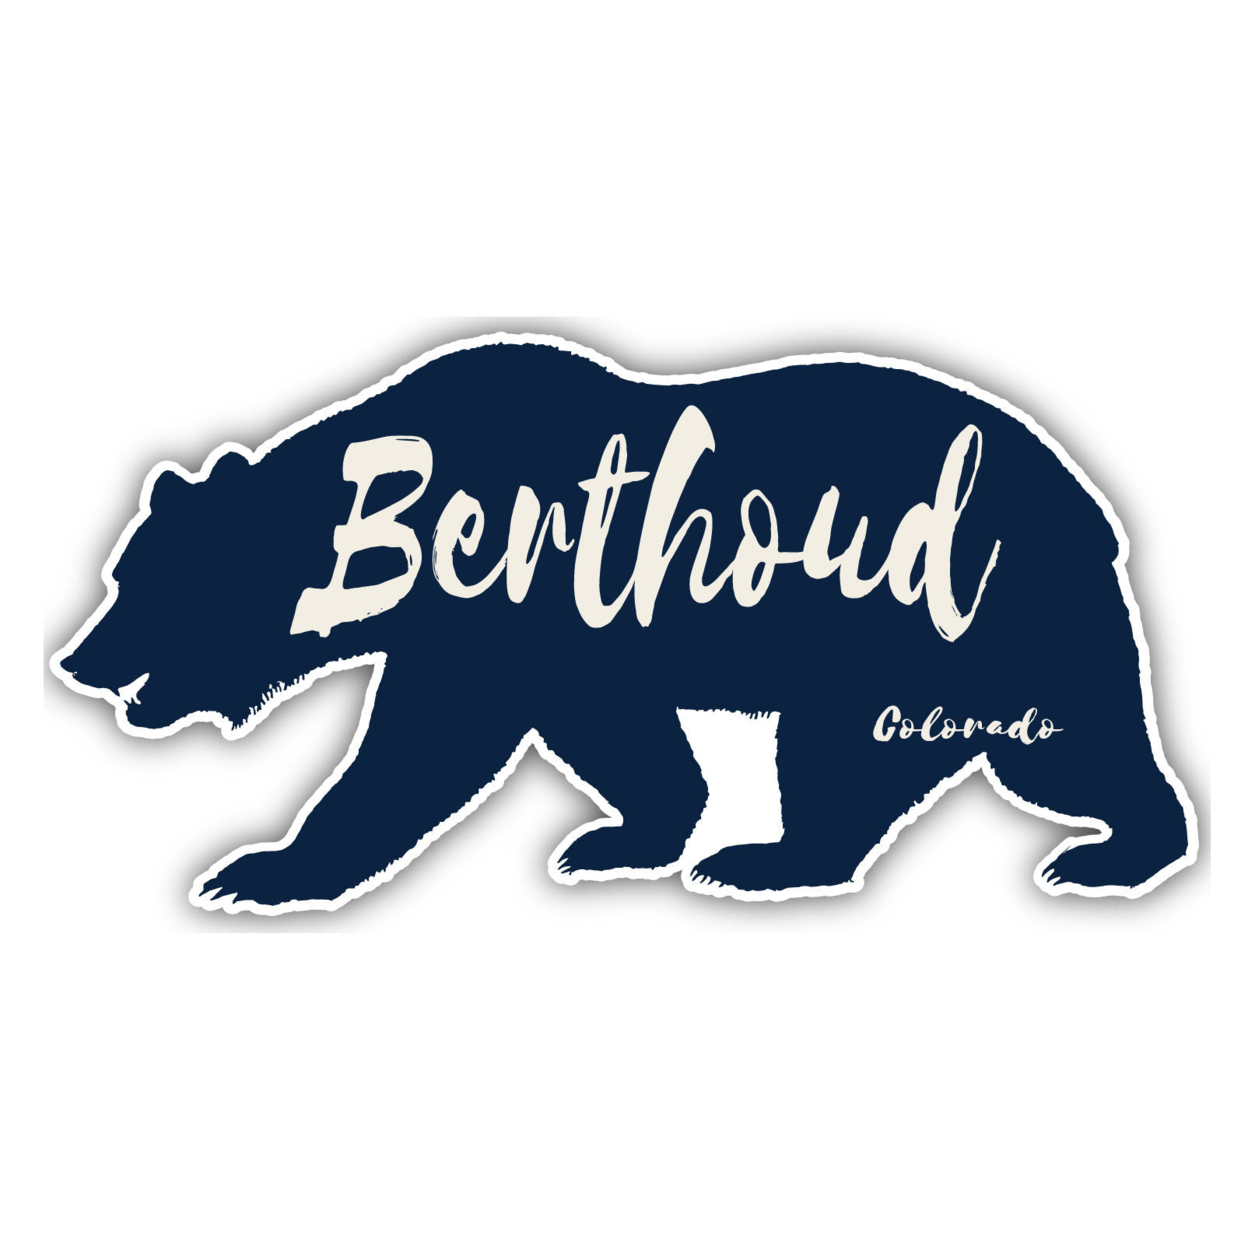 Berthoud Colorado Souvenir Decorative Stickers (Choose Theme And Size) - Single Unit, 6-Inch, Adventures Awaits